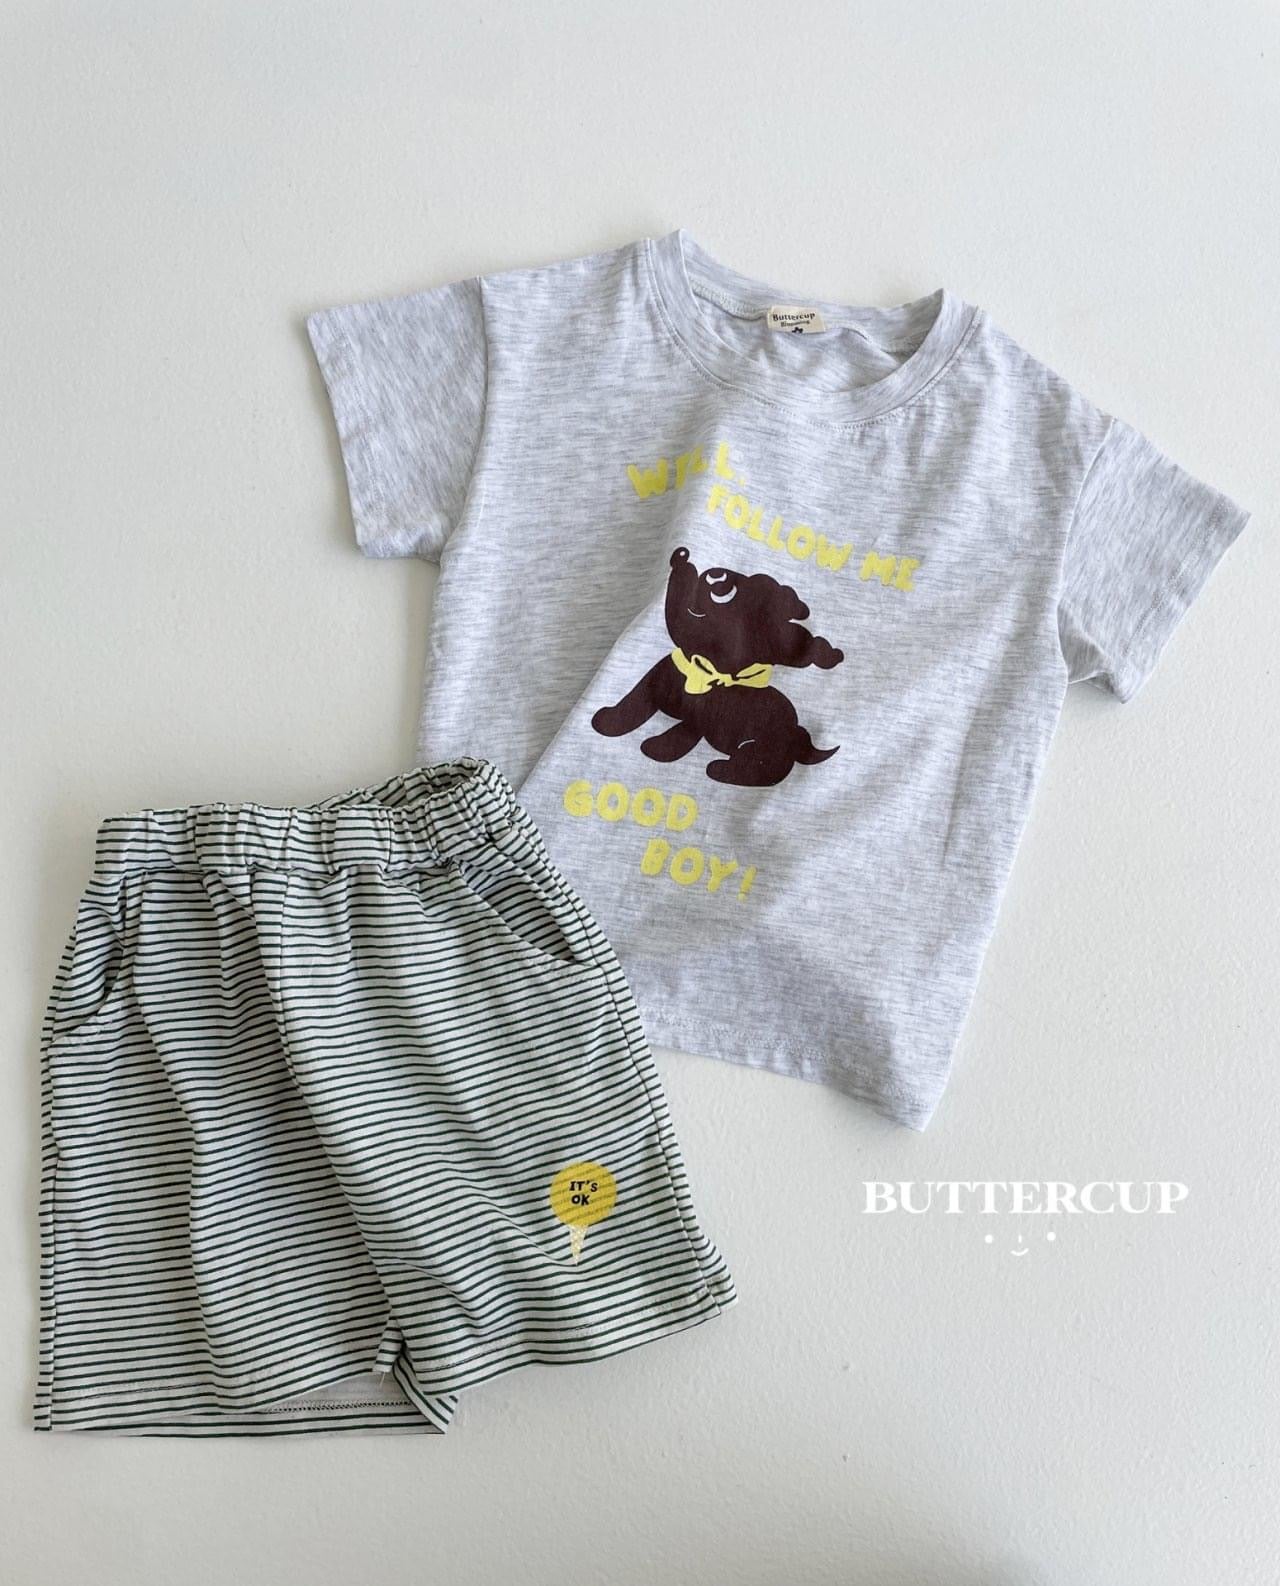 Buttercup It’s ok條紋短褲 (kids 80-120cm)